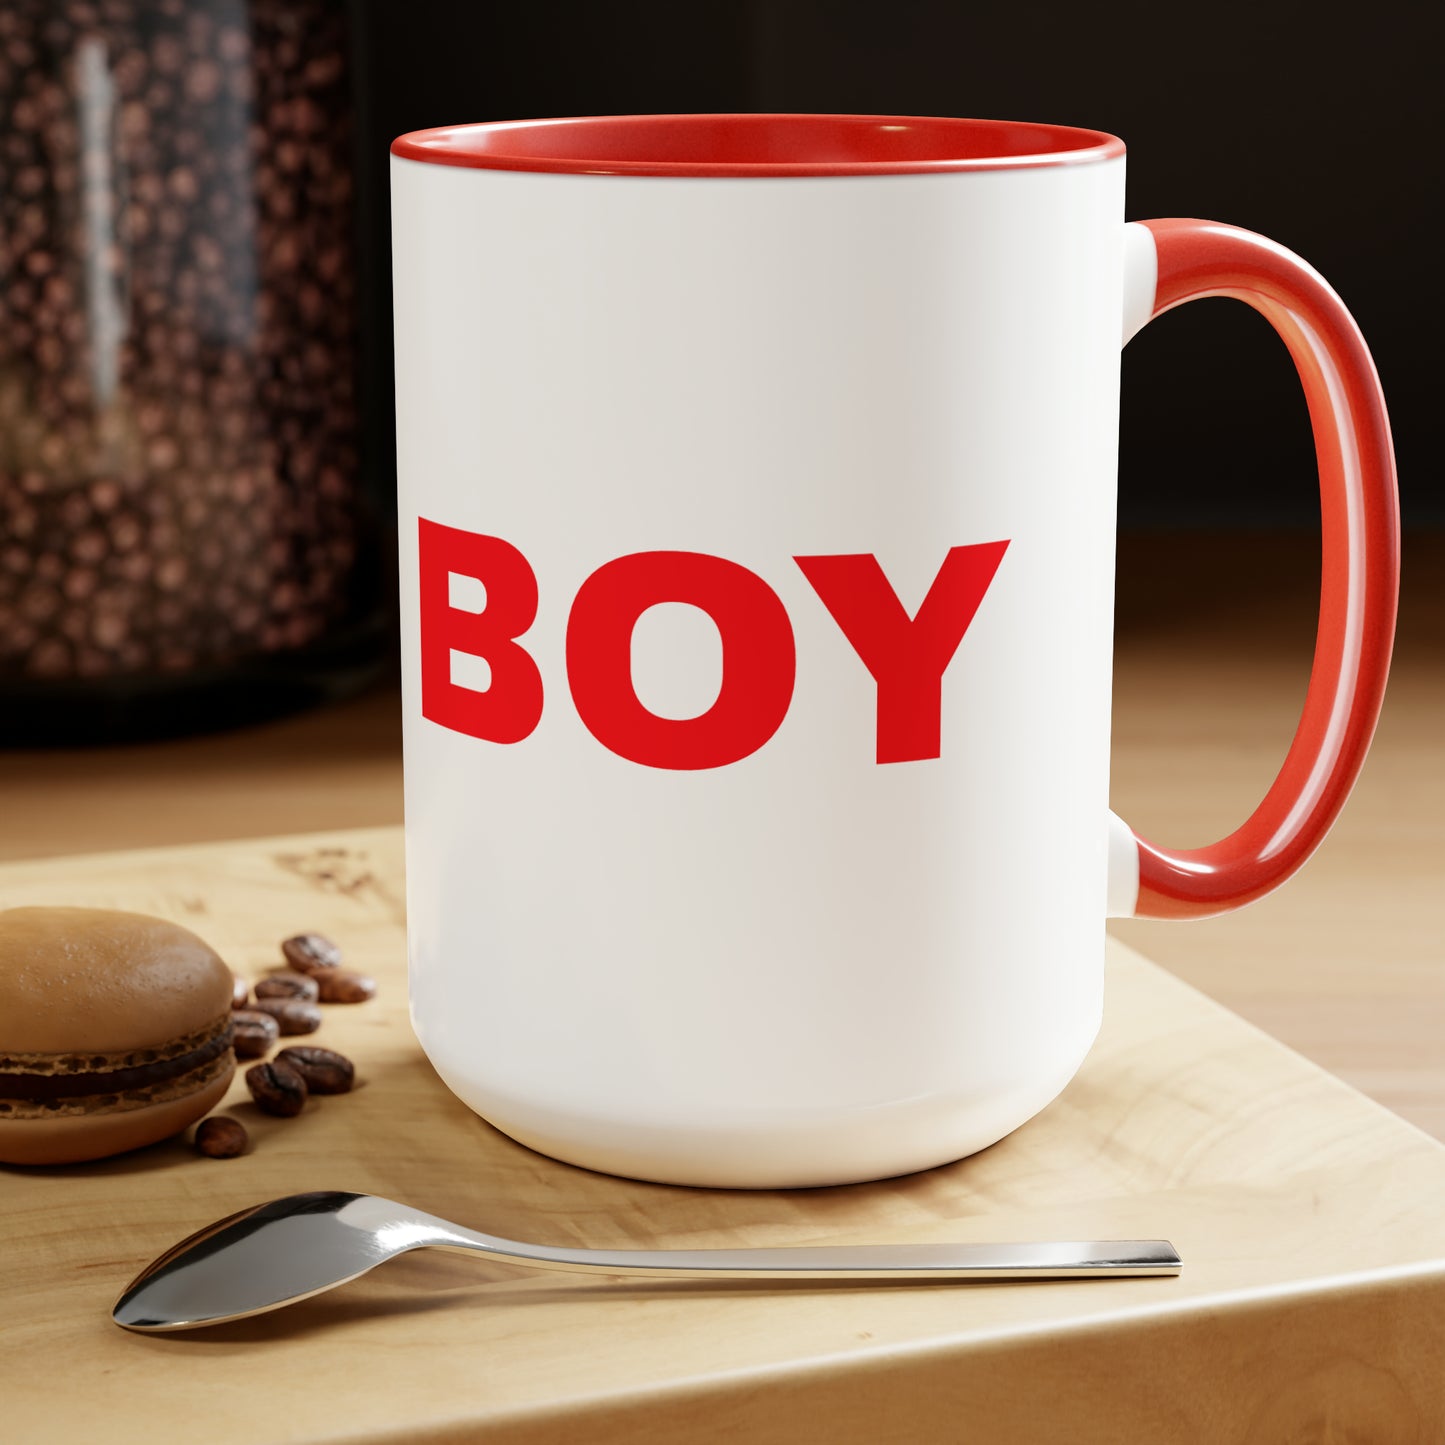 Two-Tone Coffee Mugs, 15oz - TOY BOY (Red)